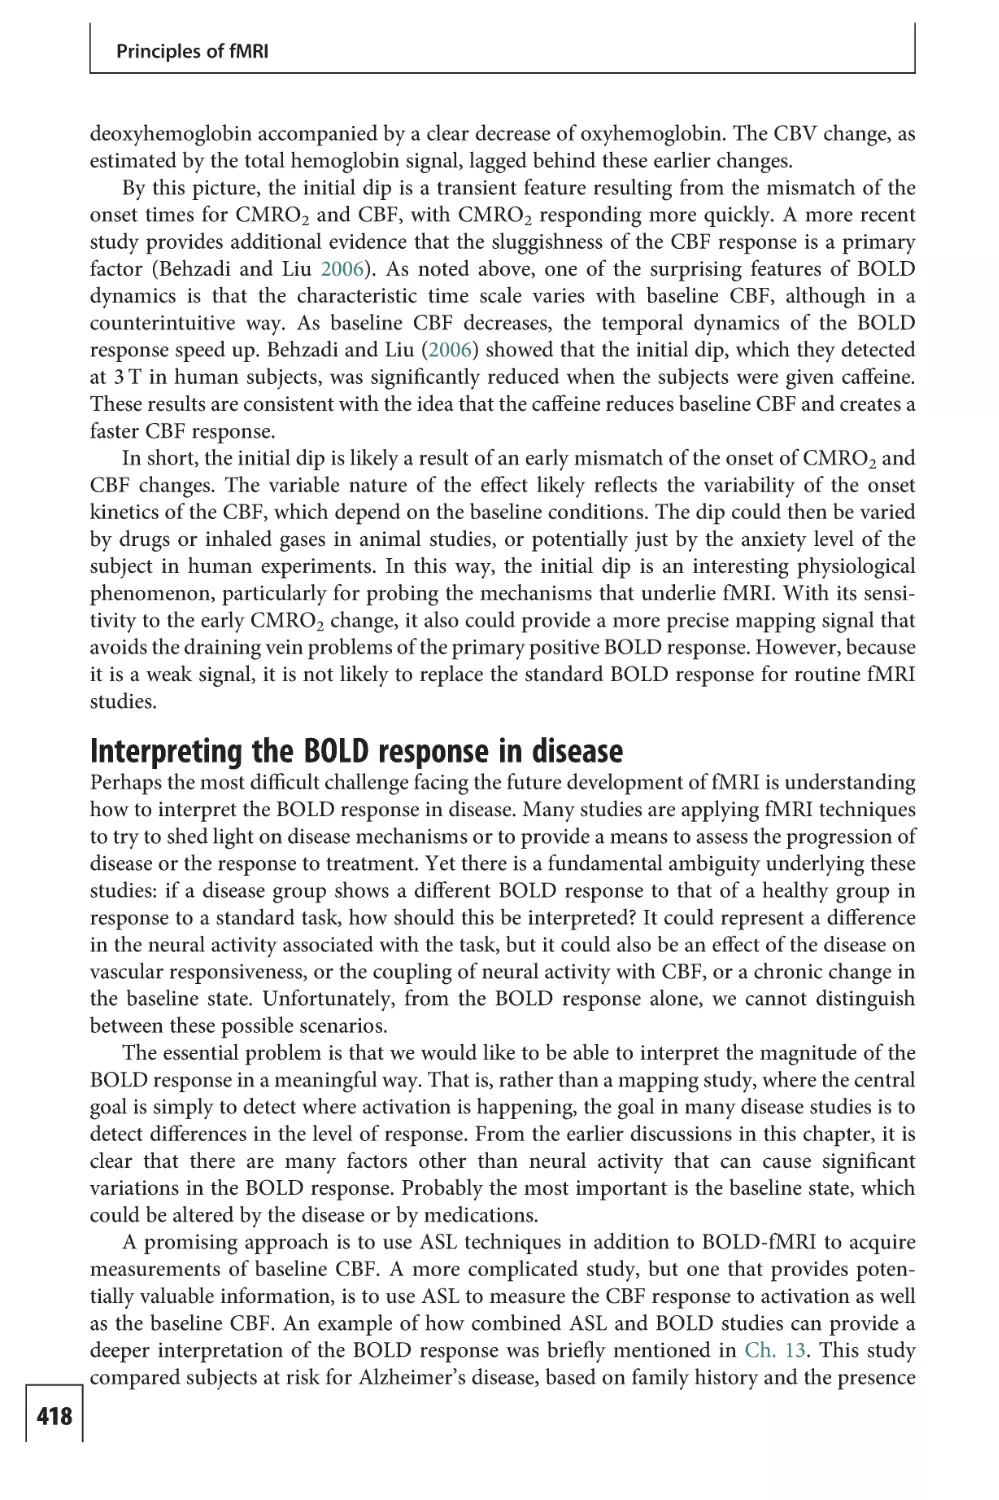 Interpreting the BOLD response in disease